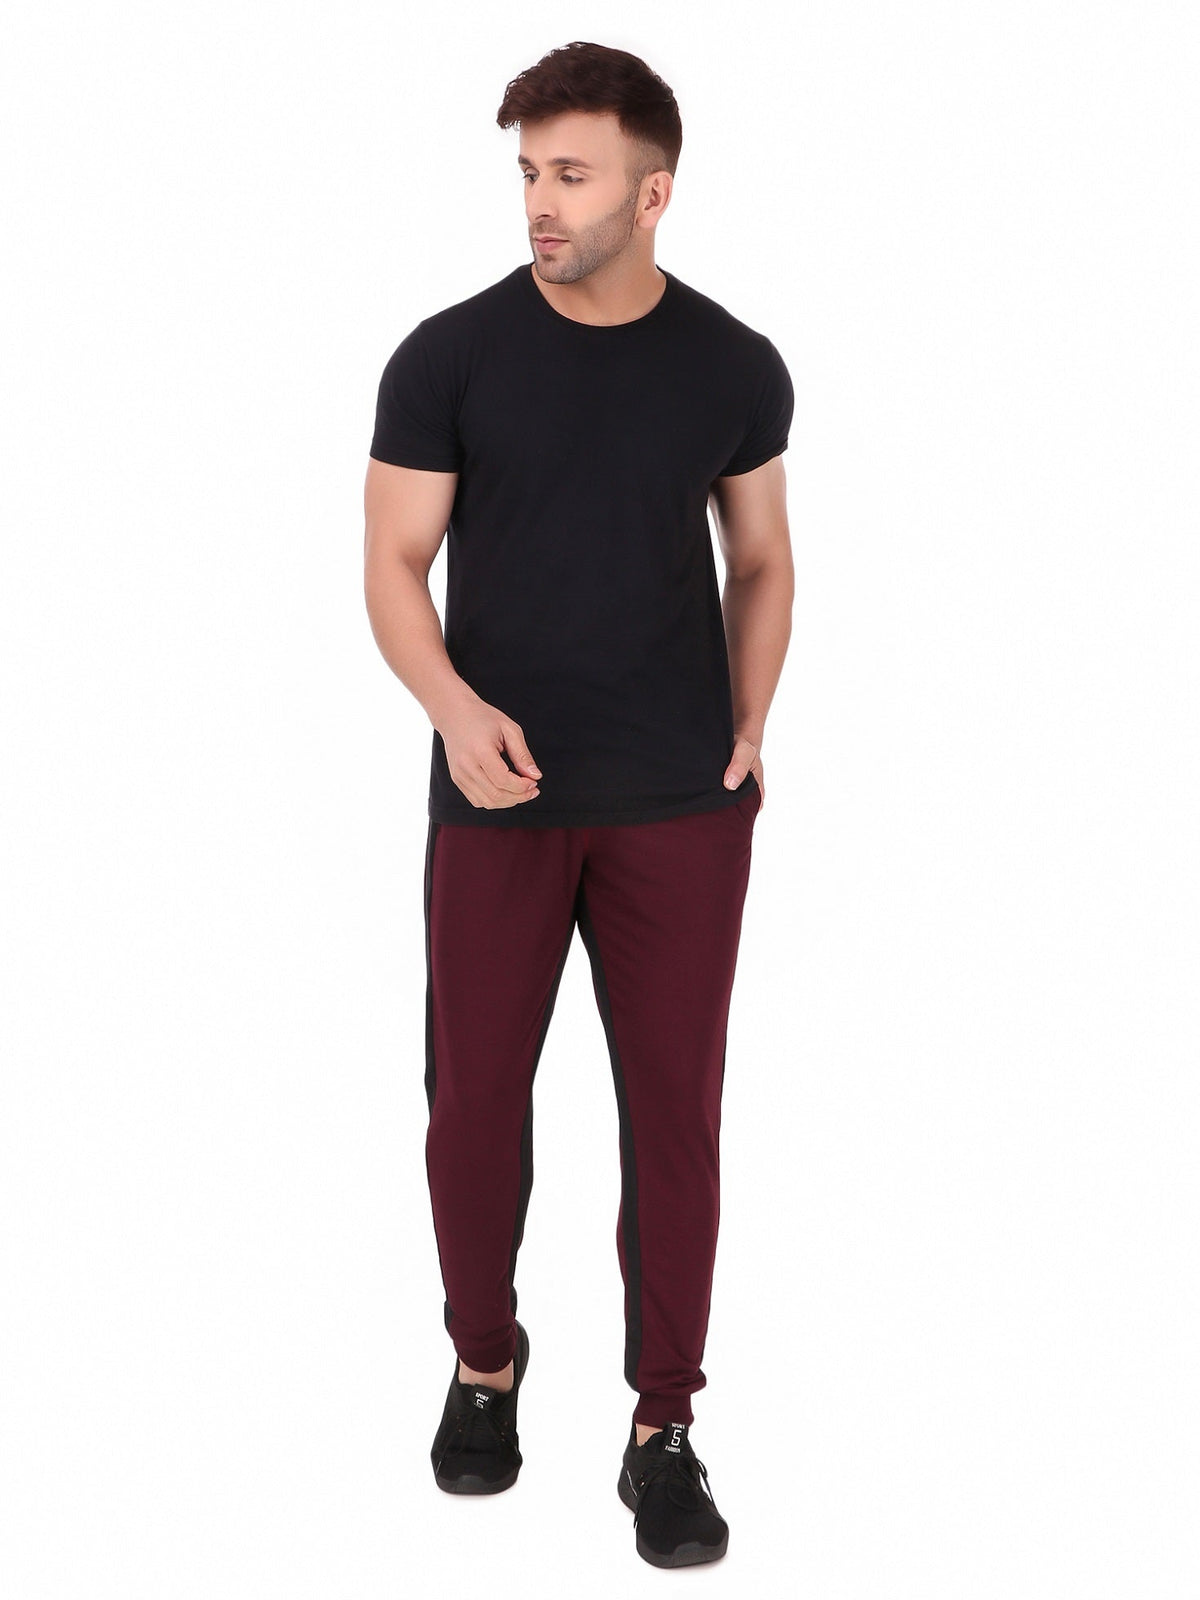 Black Solid Full Length Casual Men Regular Fit Jogger Pants - Selling Fast  at Pantaloons.com